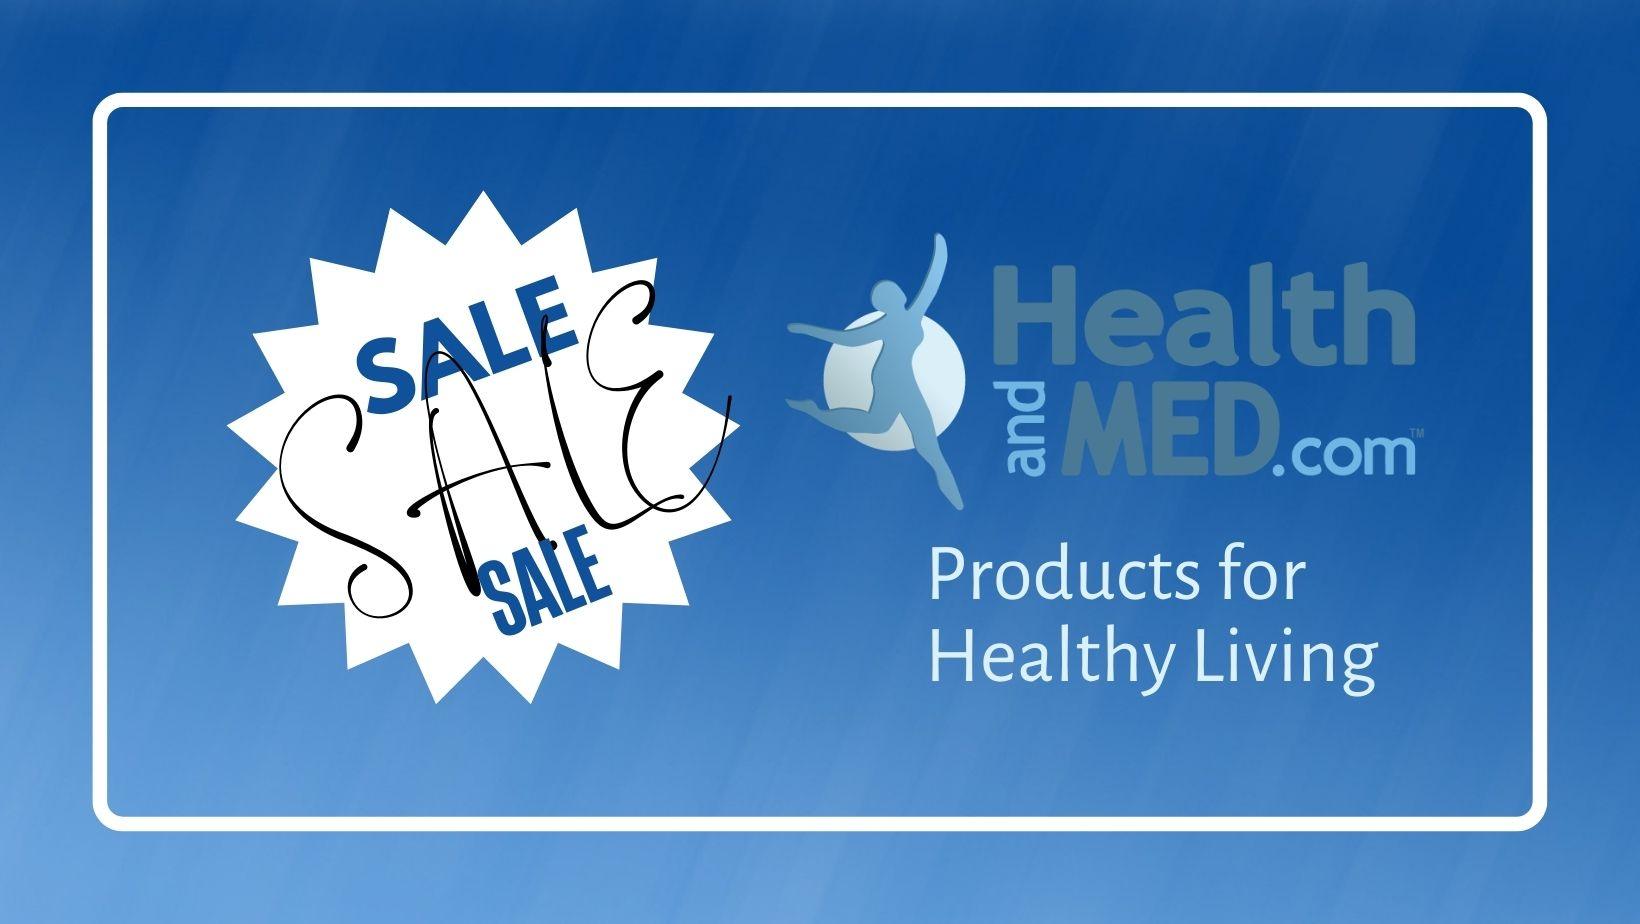 Sales/Events - HEALTHandMED